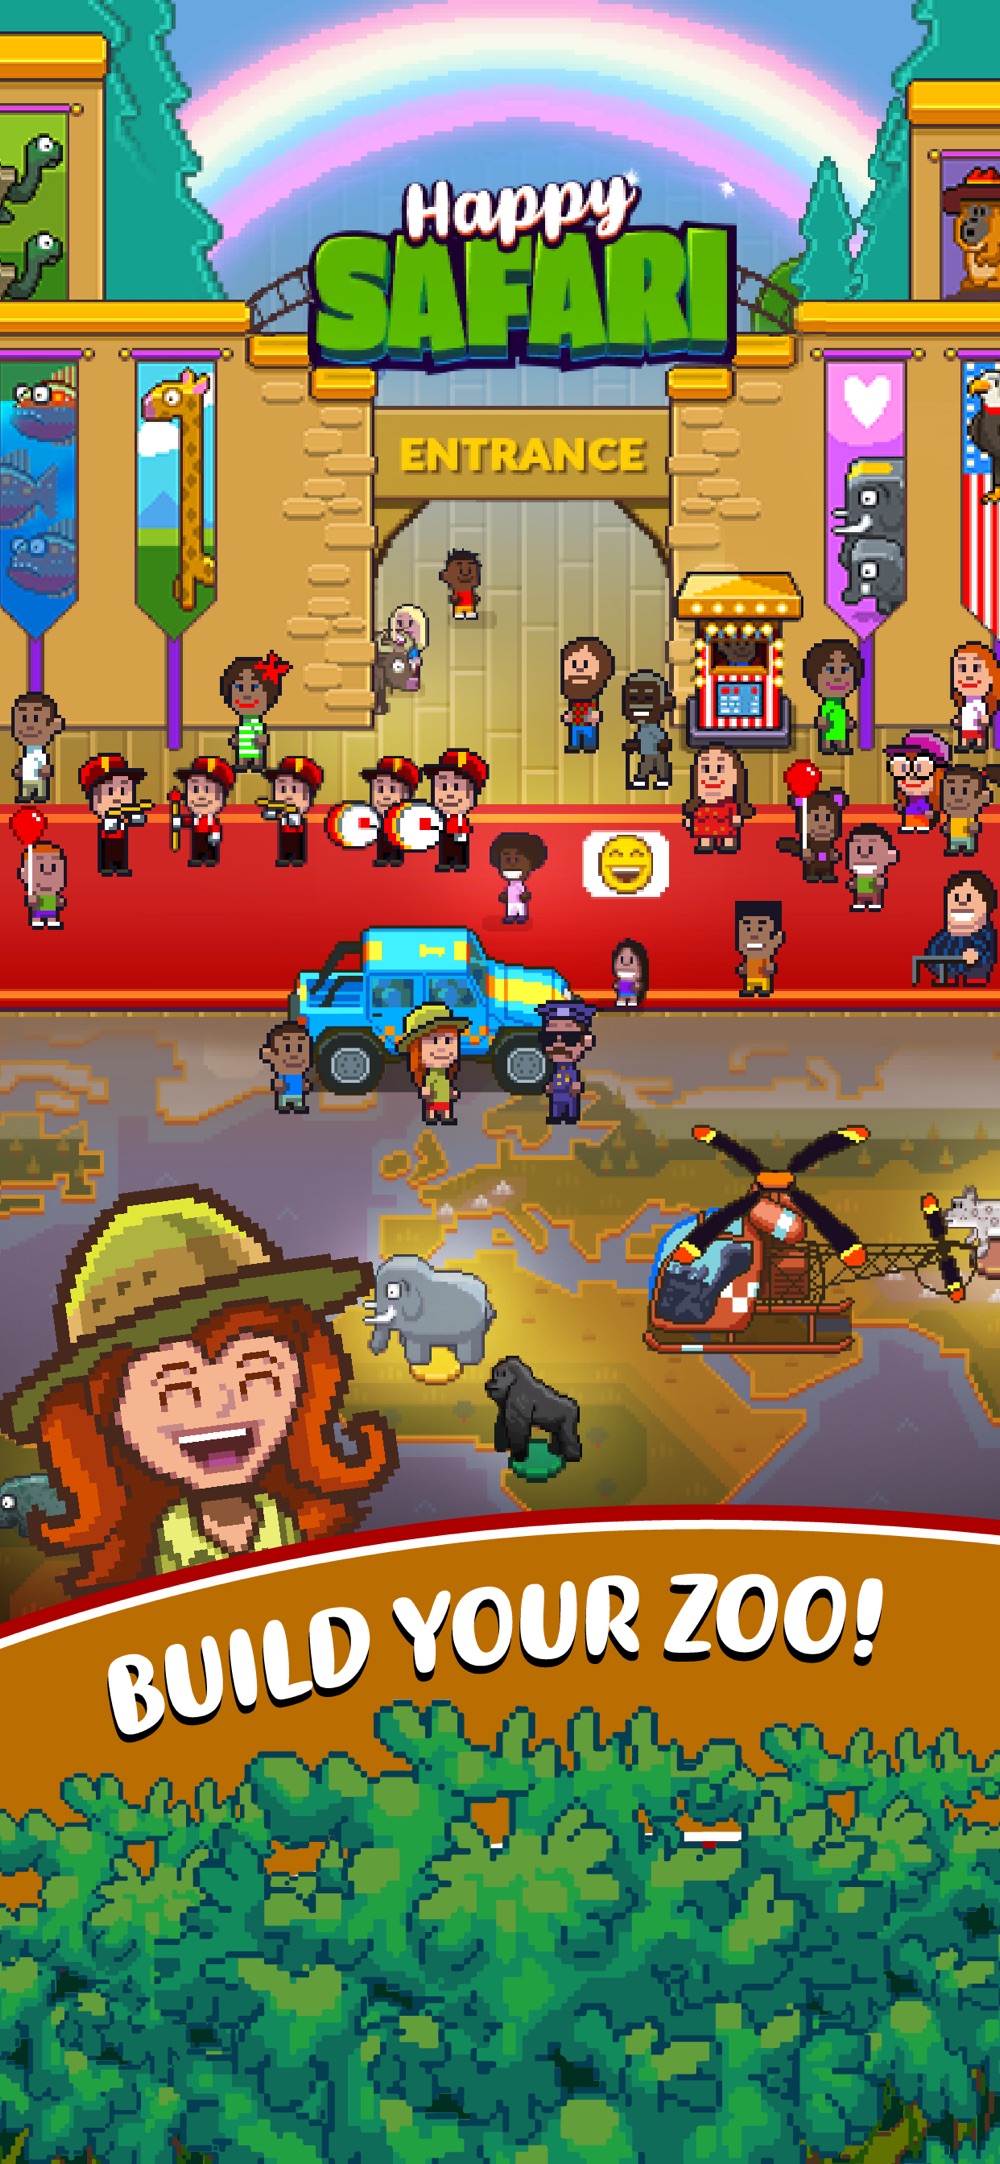 Happy Safari: a zoo game